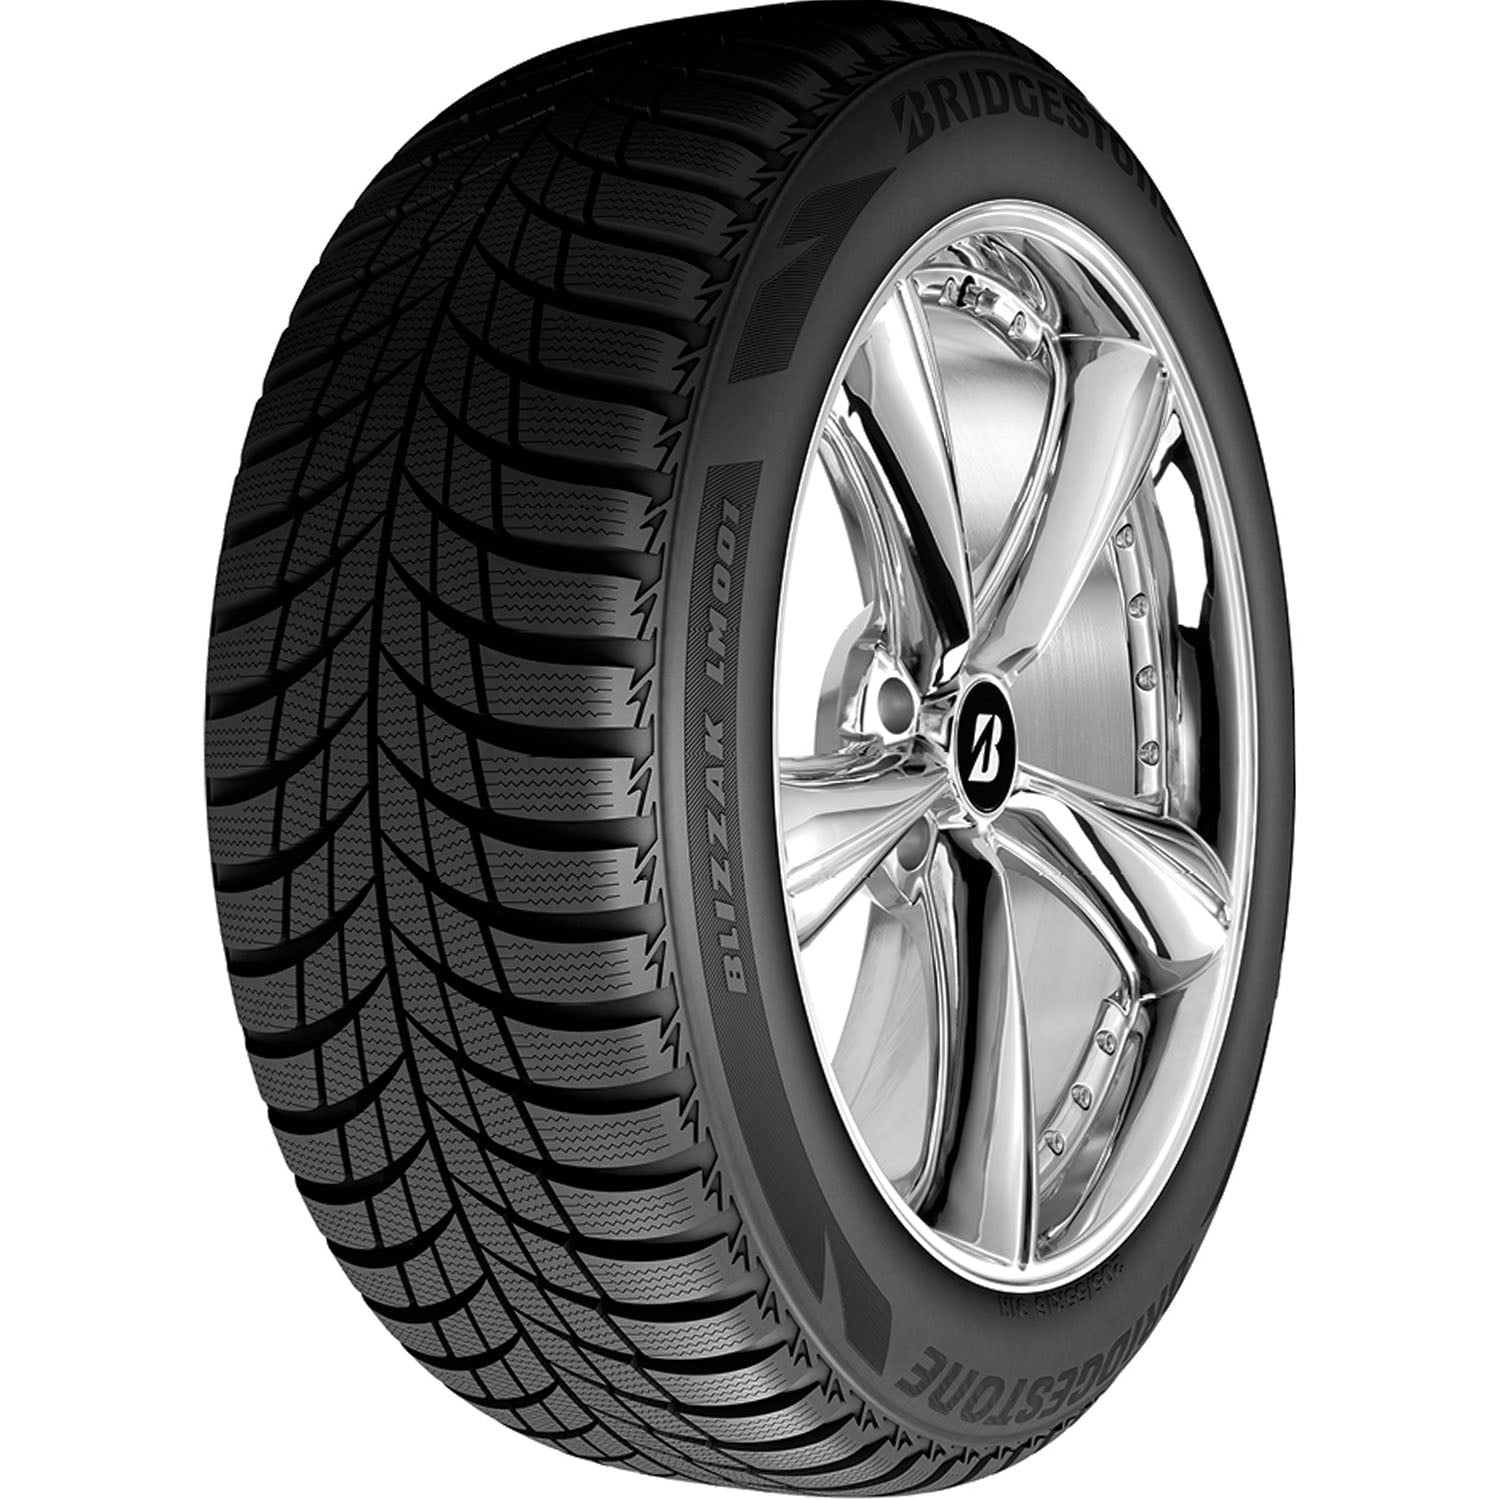 Bridgestone Blizzak LM001 Winter 205/55R17 Execline, 2022-23 Jetta Passenger Trend Fits: Tire Venue Hyundai Volkswagen 91H 2019-21